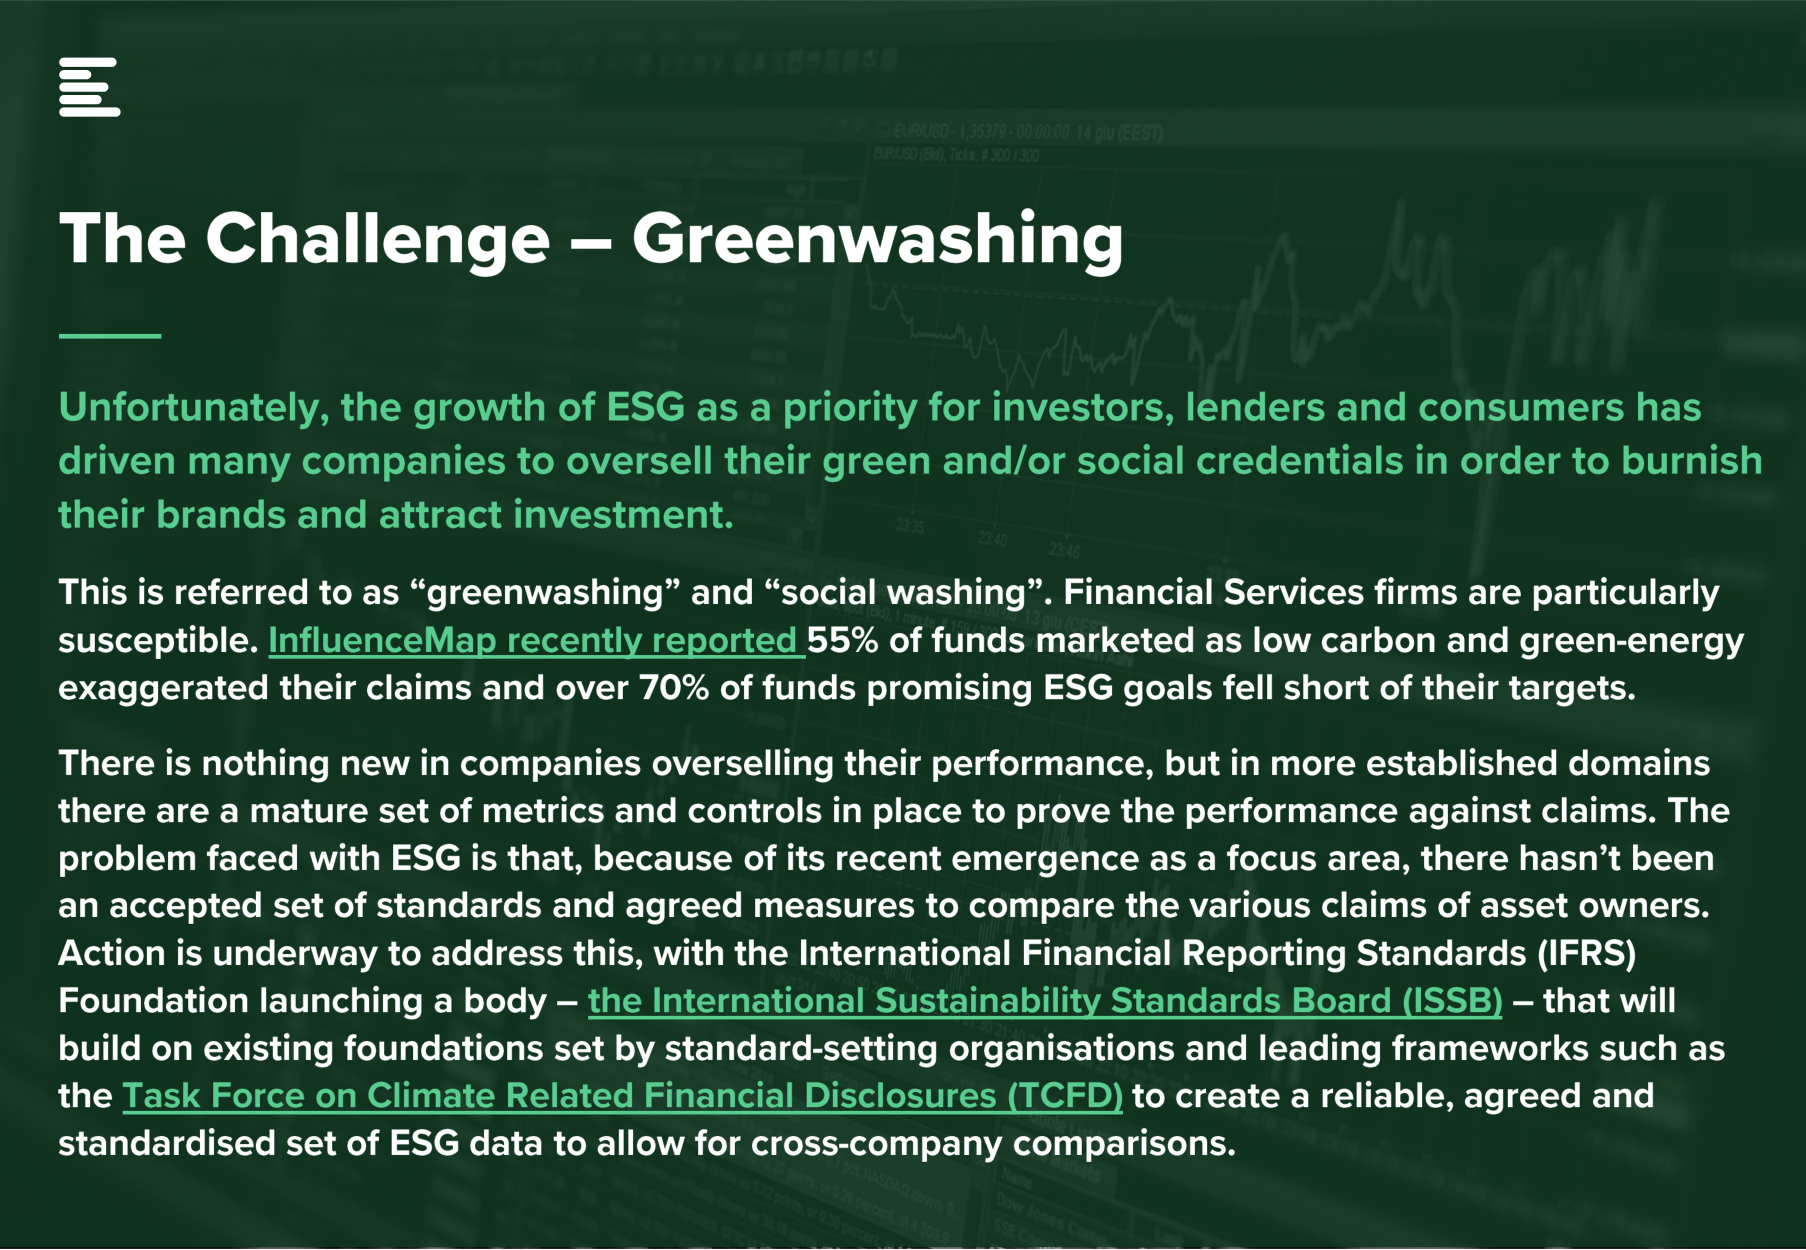 Squashing-Greenwashing-with-Emerging-Technology-5